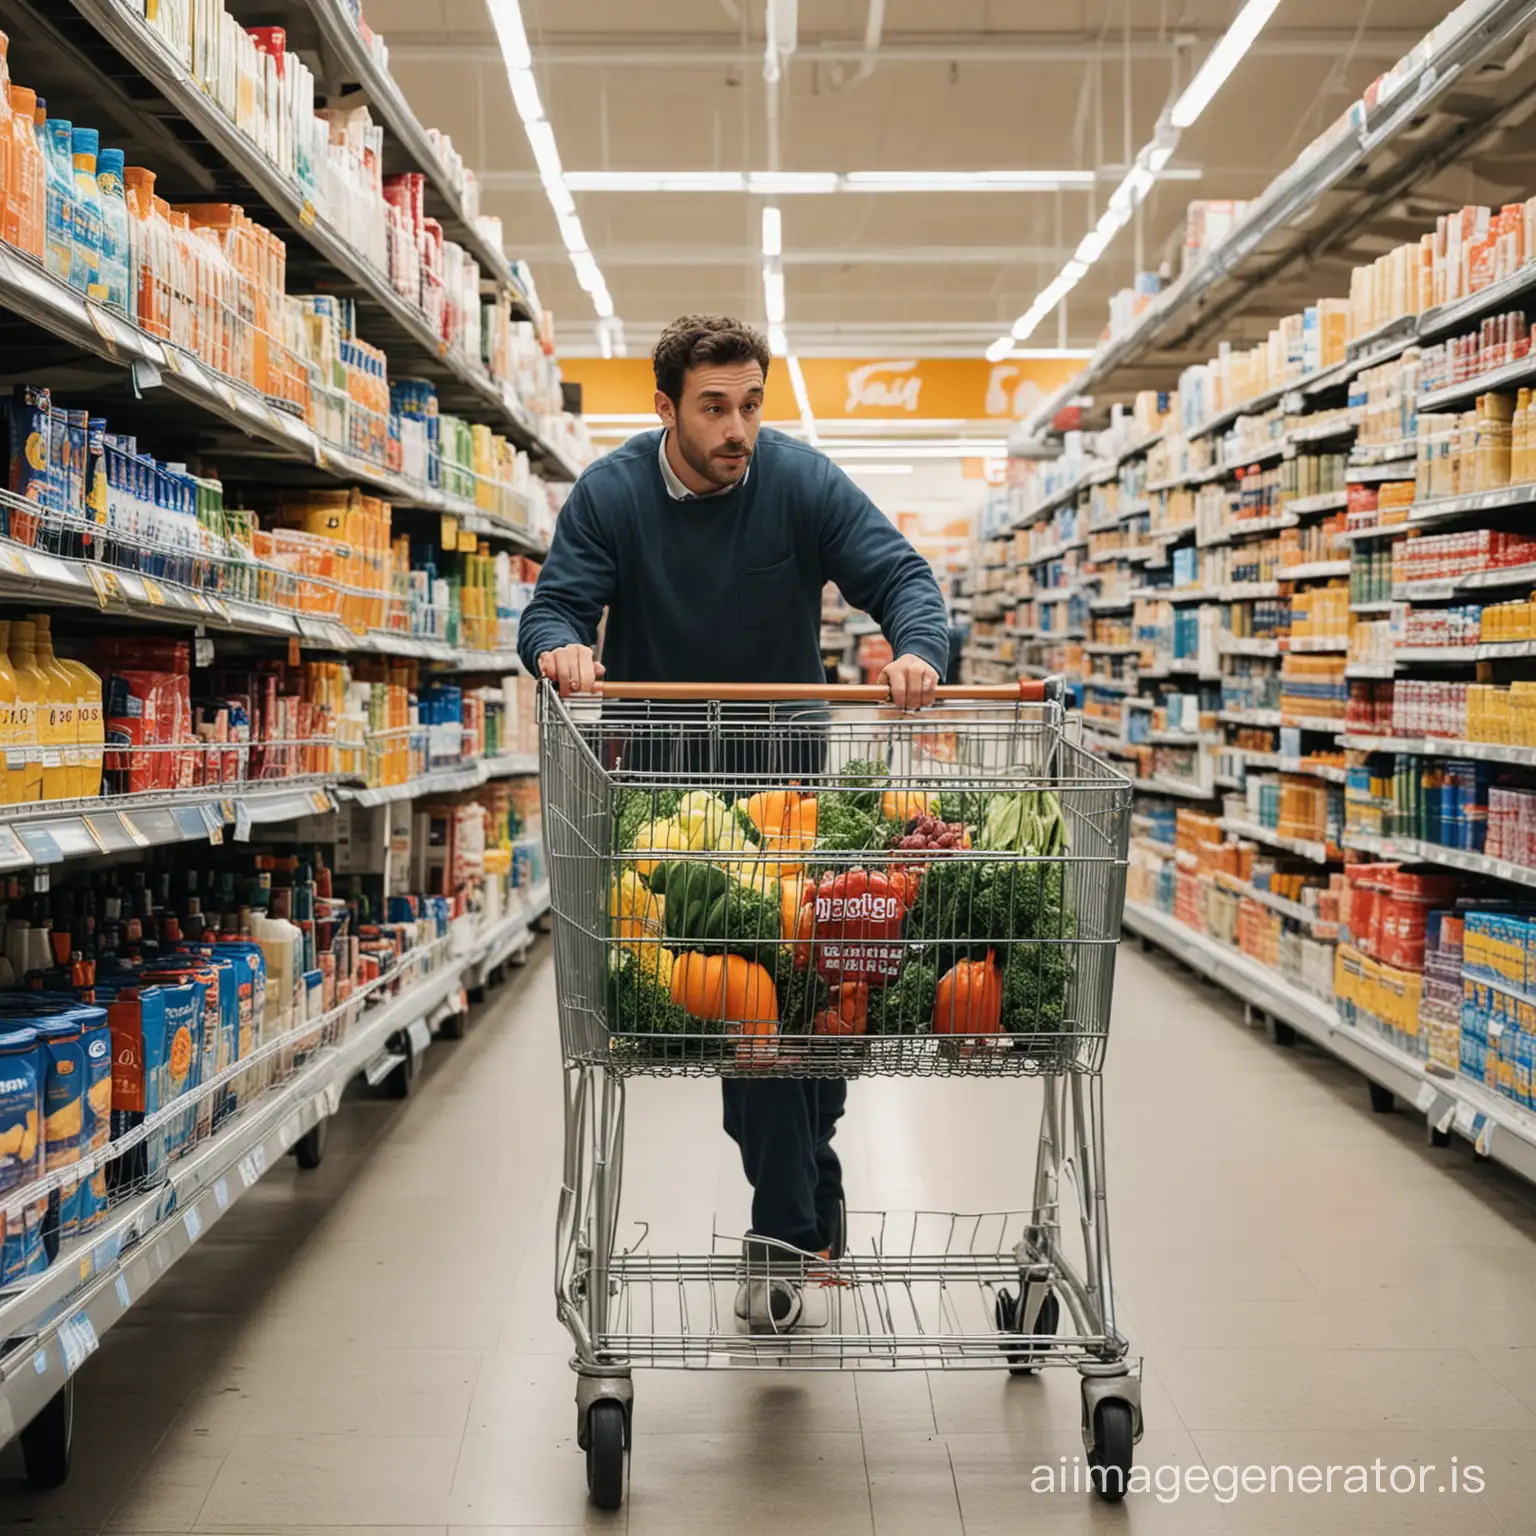 A man running a supermarket trolley
in a supermarket